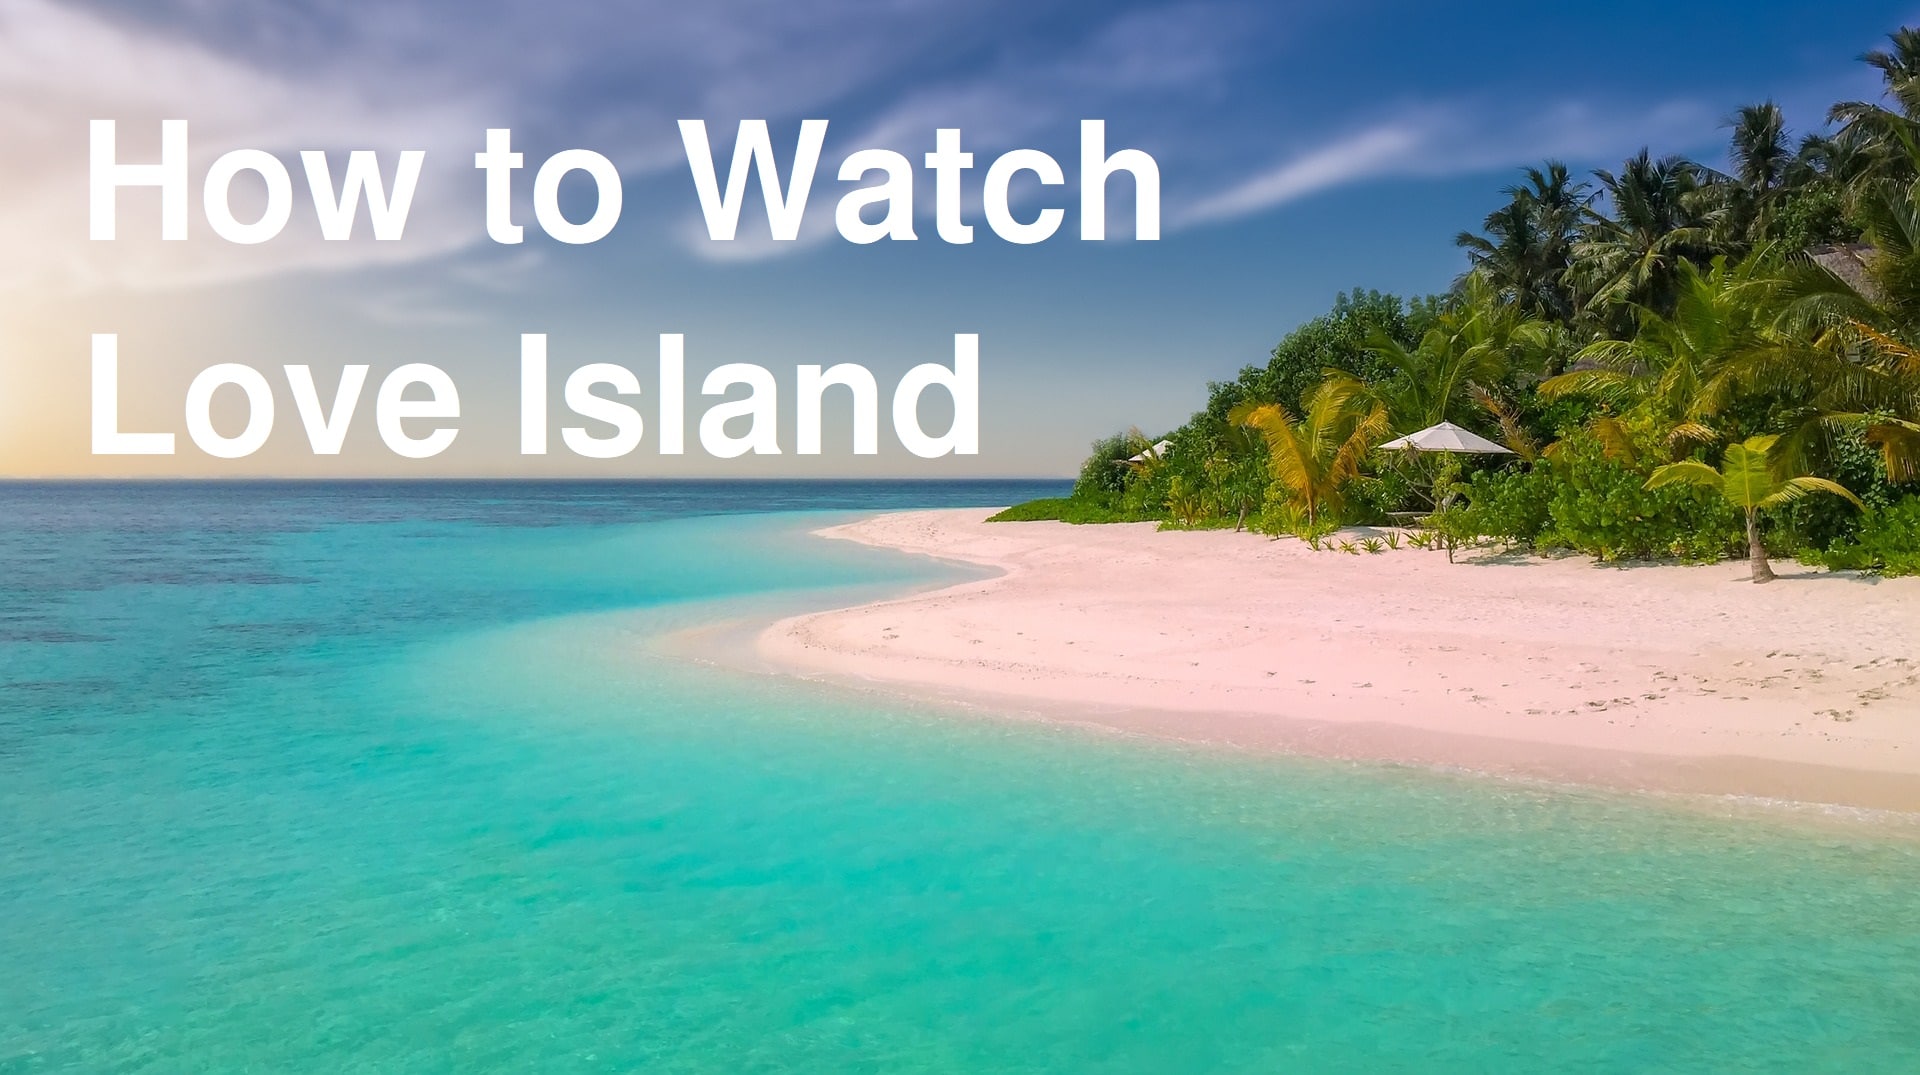 Love Island Temporada 2 - assista todos episódios online streaming